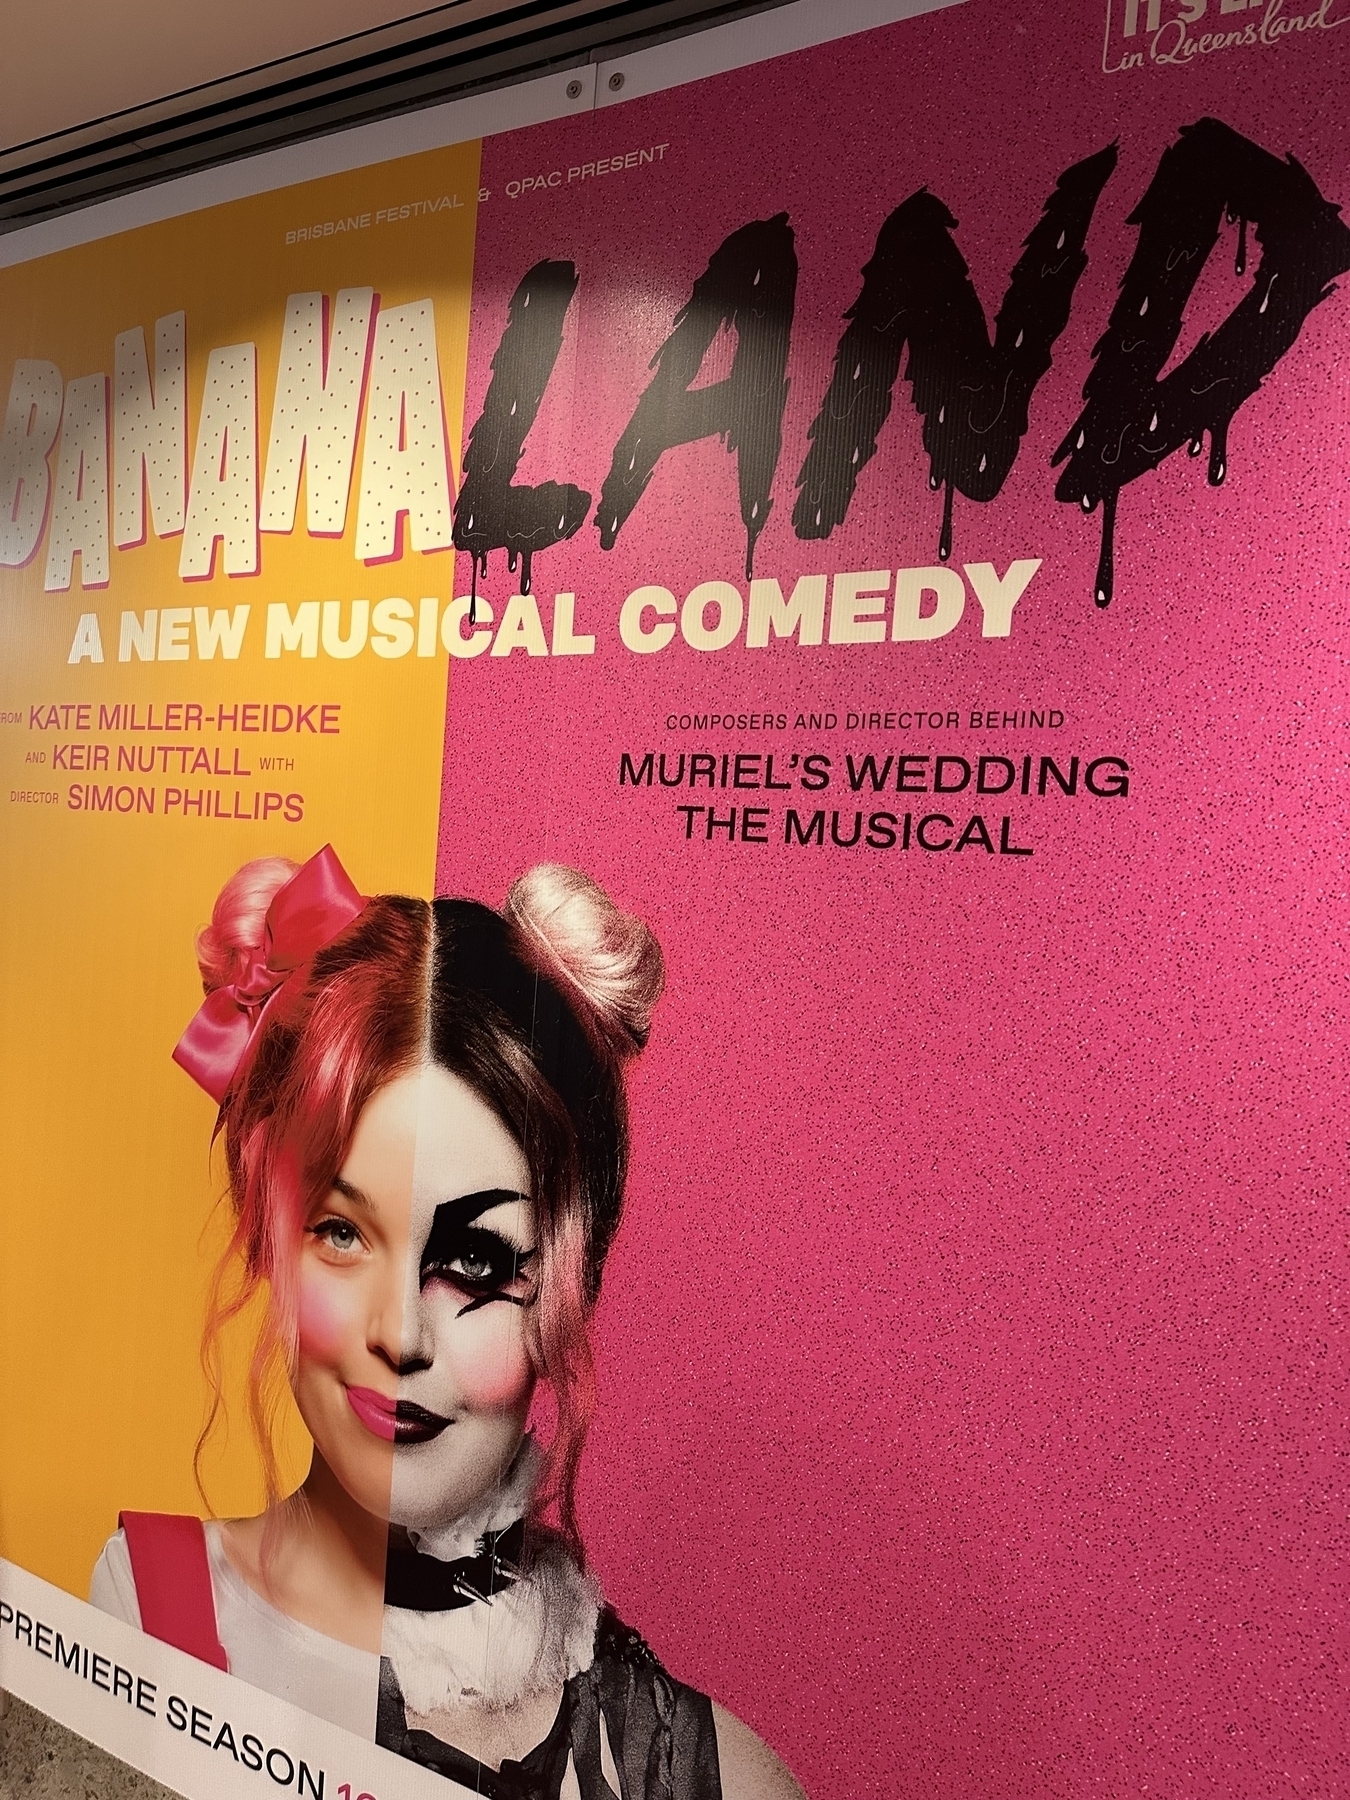 A poster advertising a musical comedy - Bananaland. 